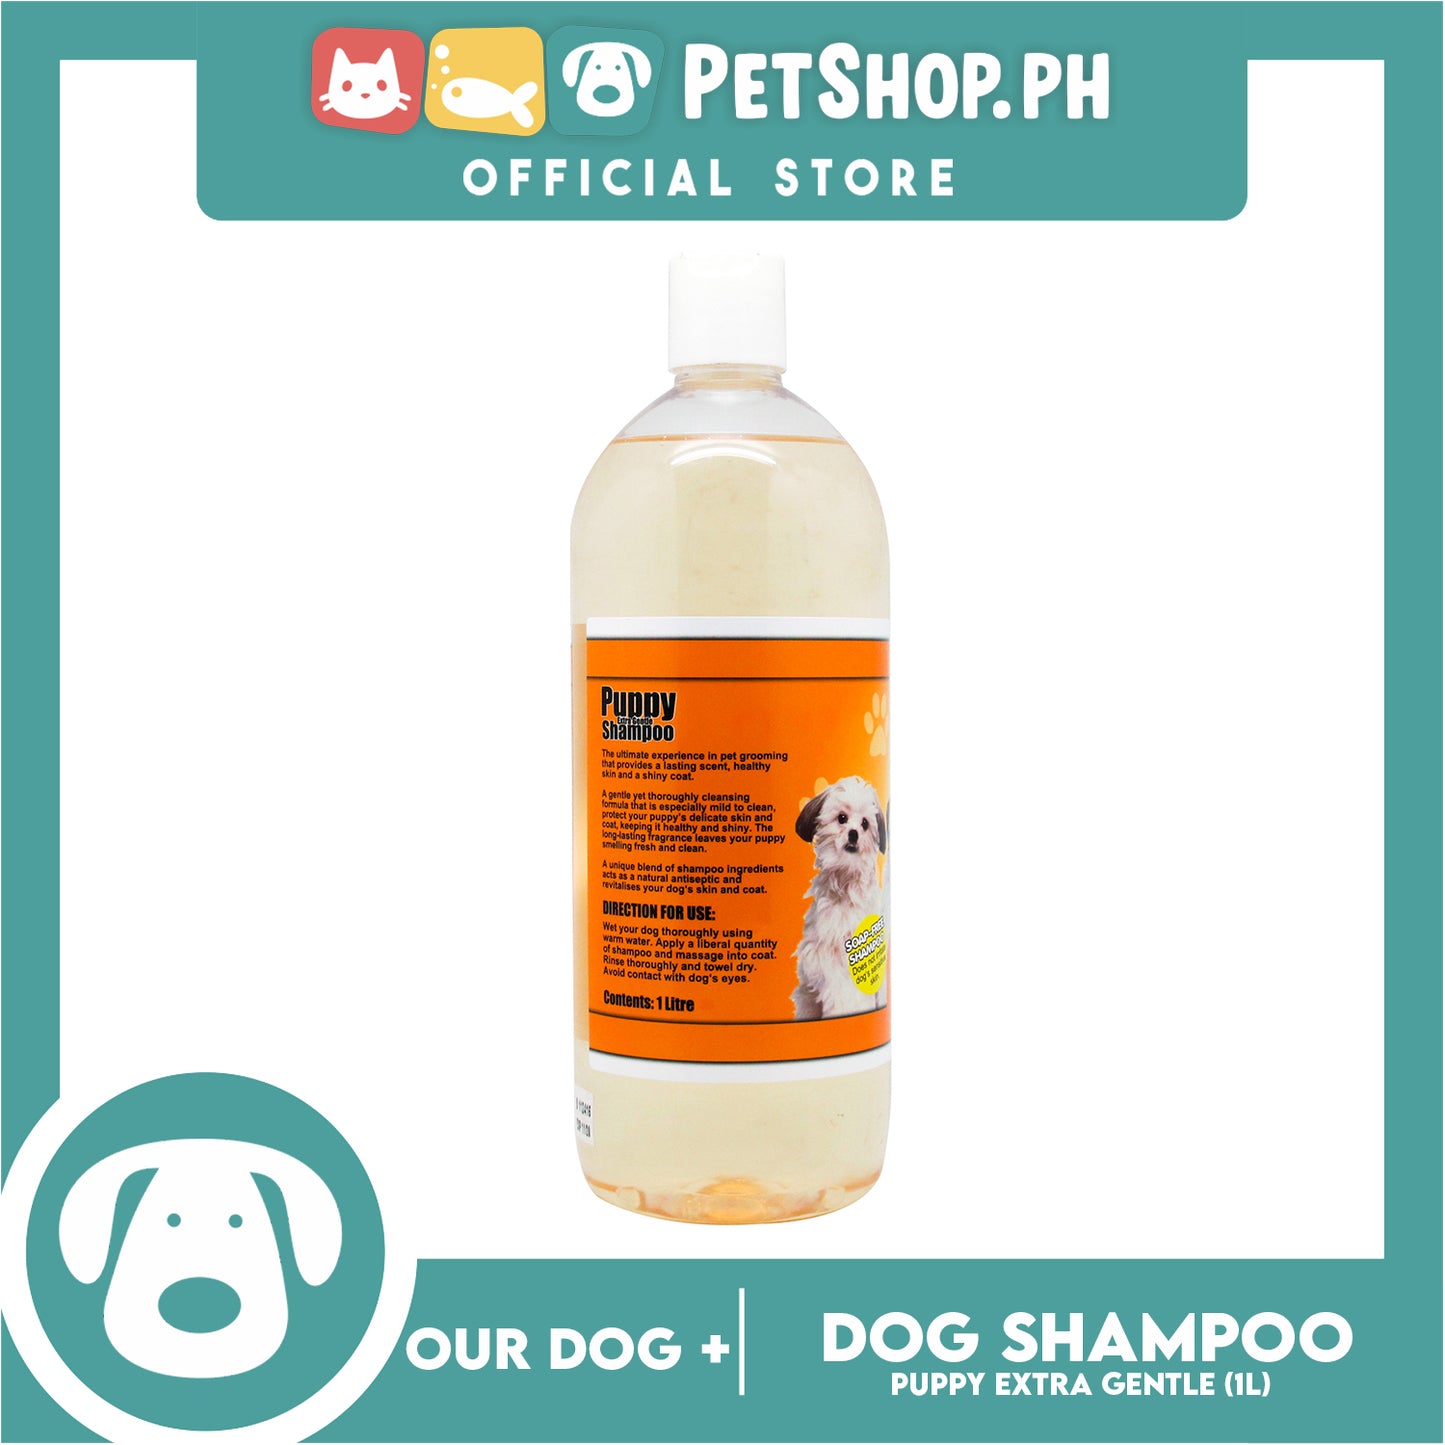 Our Dog Plus Puppy Extra Gentle Dog Shampoo 1 Liter